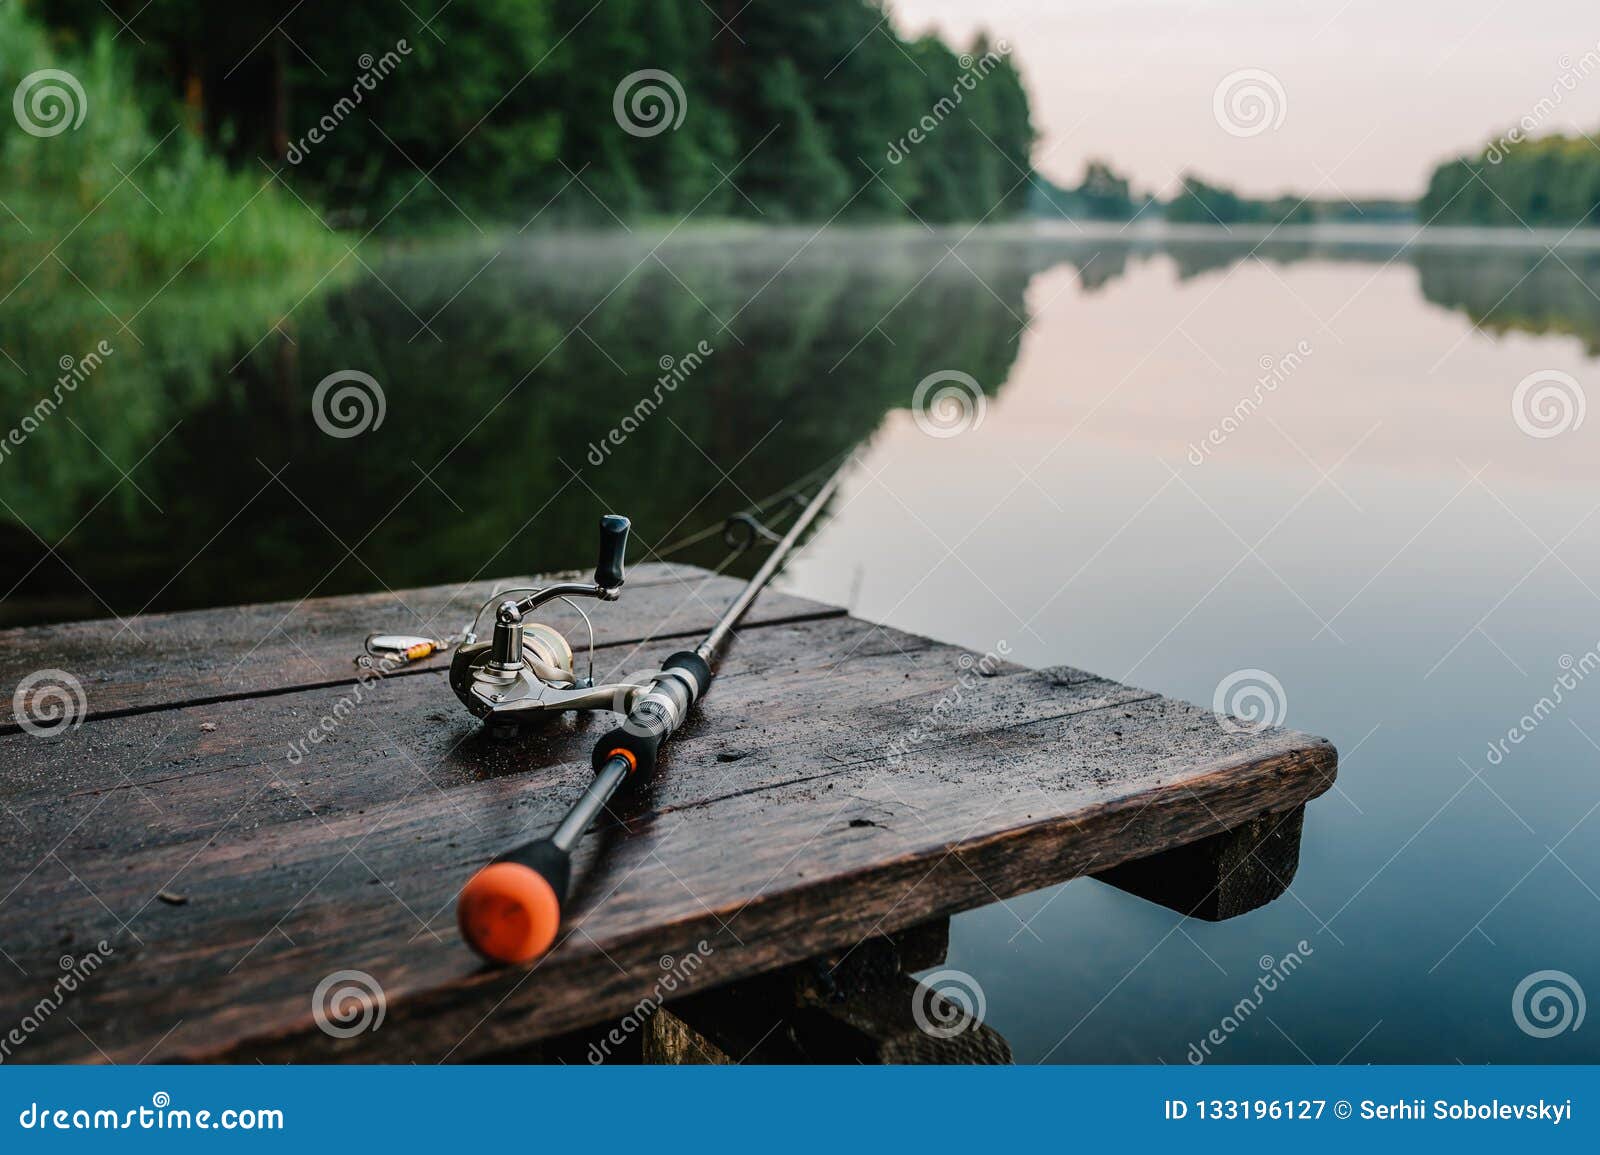 https://thumbs.dreamstime.com/z/fishing-rod-spinning-reel-background-pier-river-bank-su-sunrise-fog-against-backdrop-lake-misty-morning-wild-nature-133196127.jpg